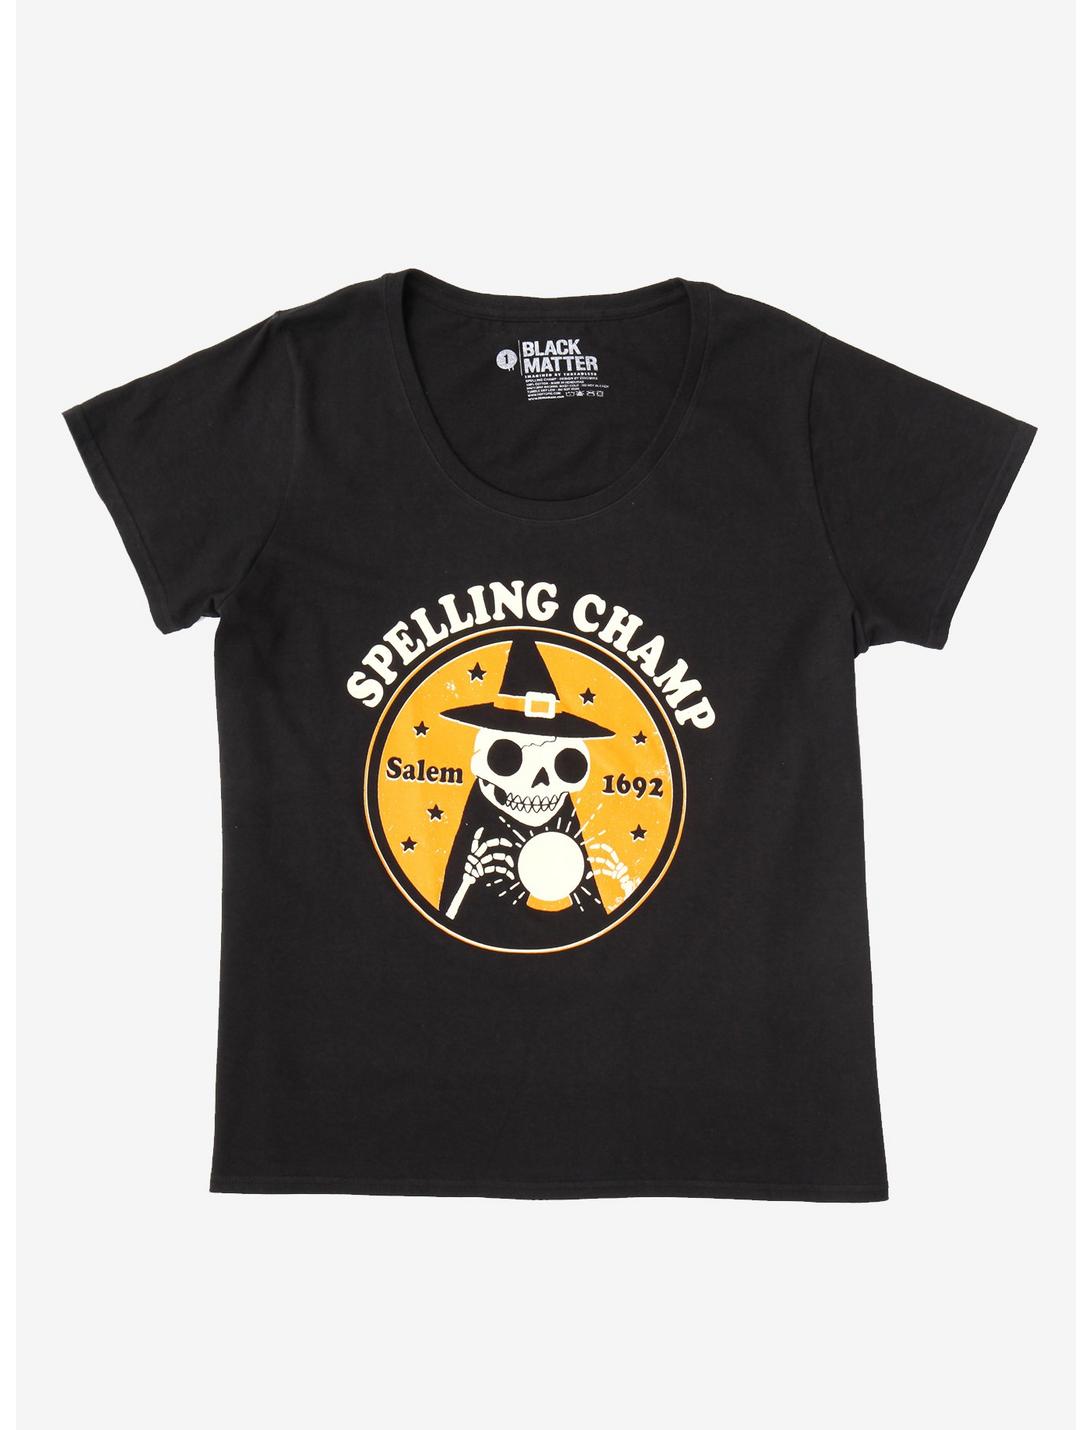 Spelling Champ Girls T-Shirt Plus Size, MULTI, hi-res